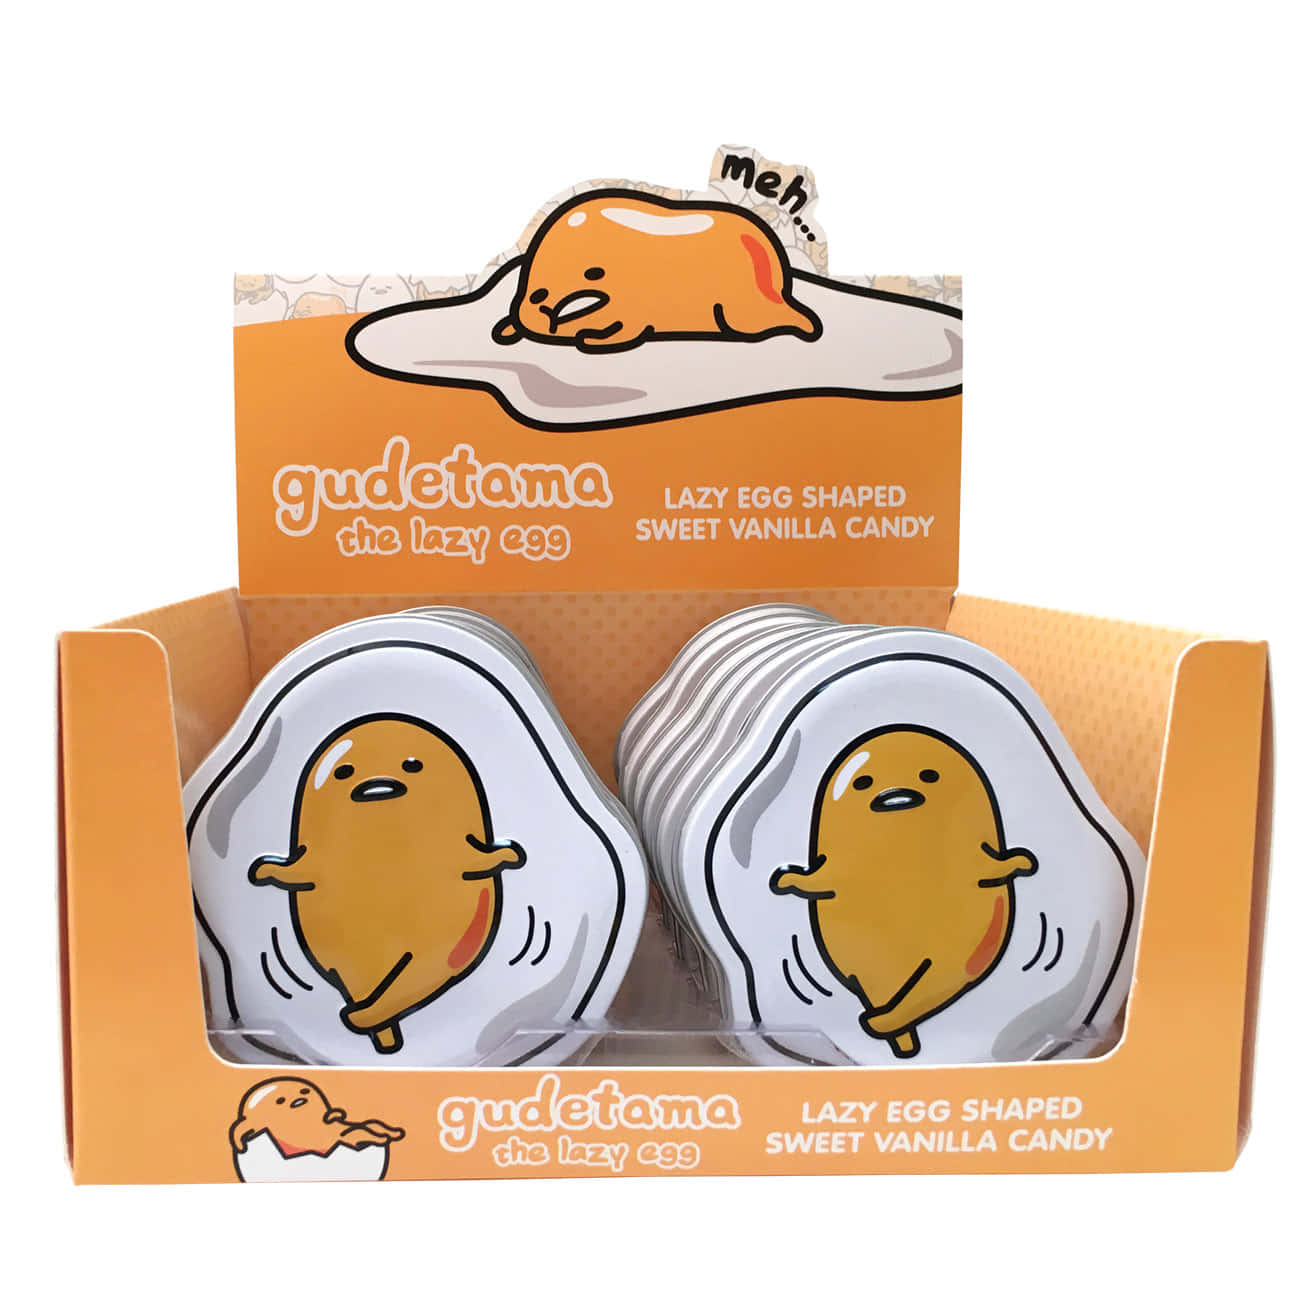 A Display Of A Box Of Guddoma Egg Magnets